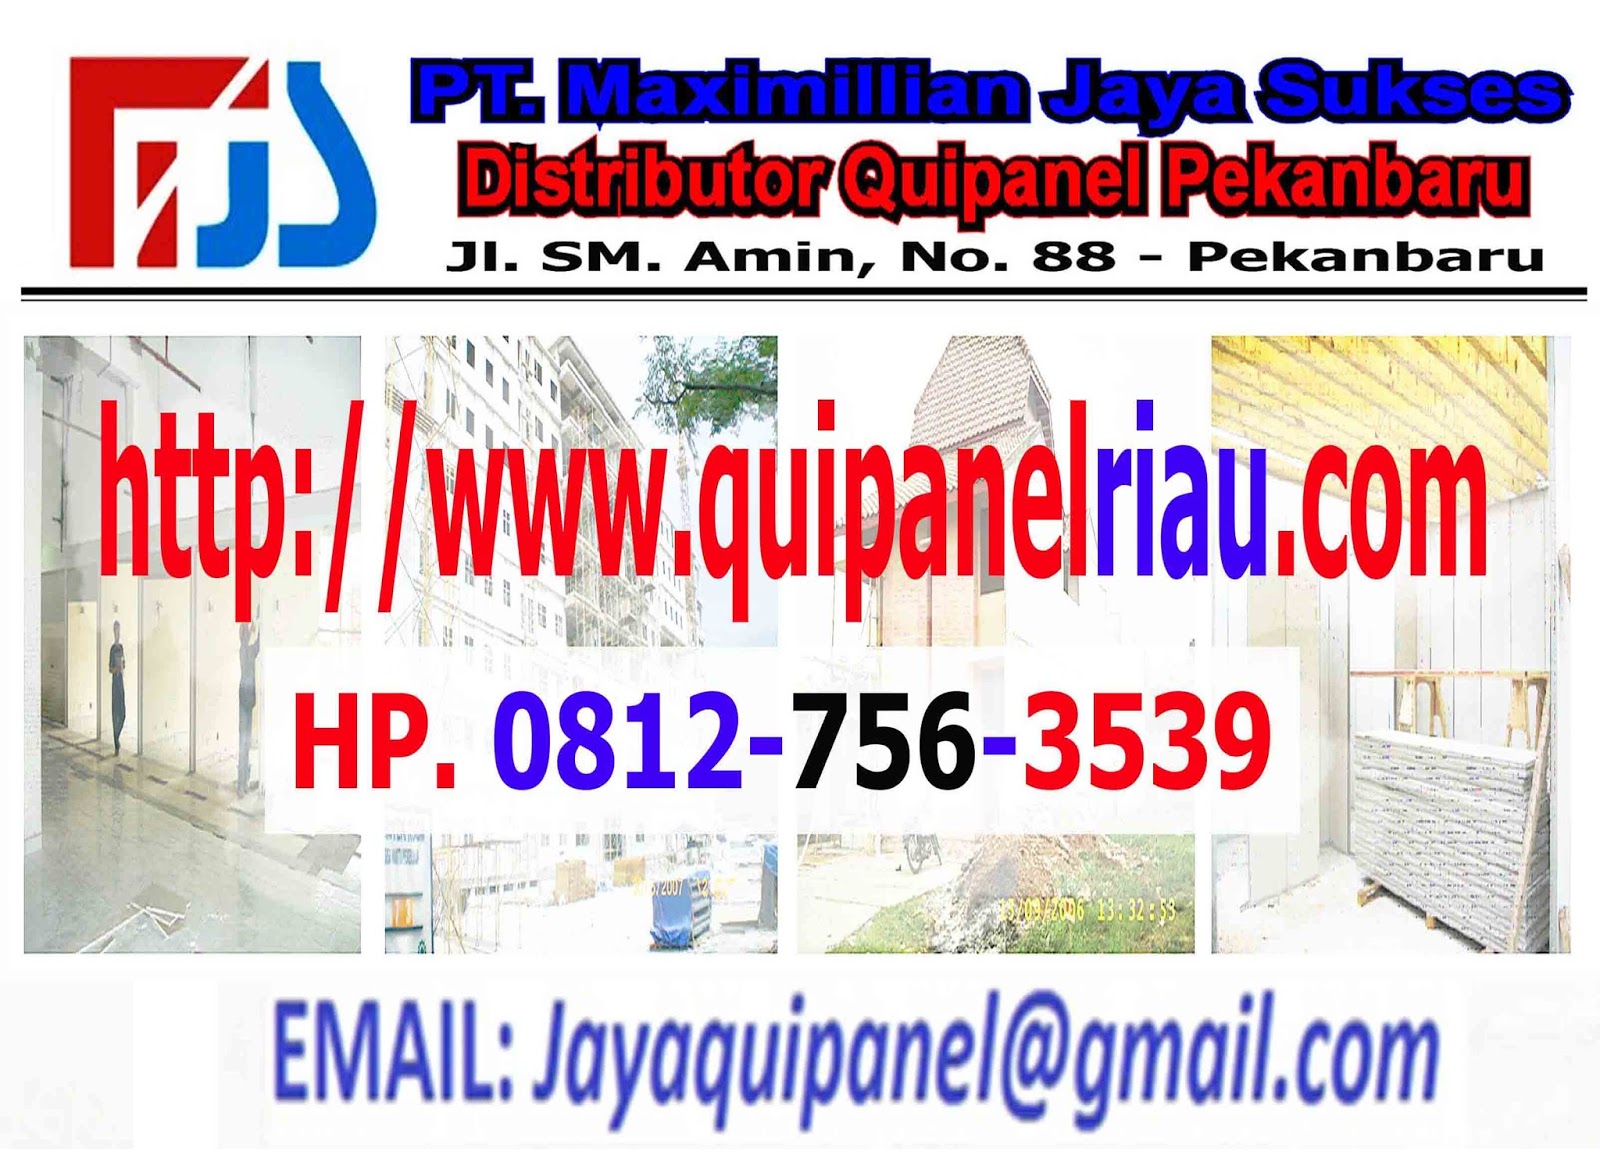 Qui Panel : keleImages for dinding qui panel pekanbaru Image result for